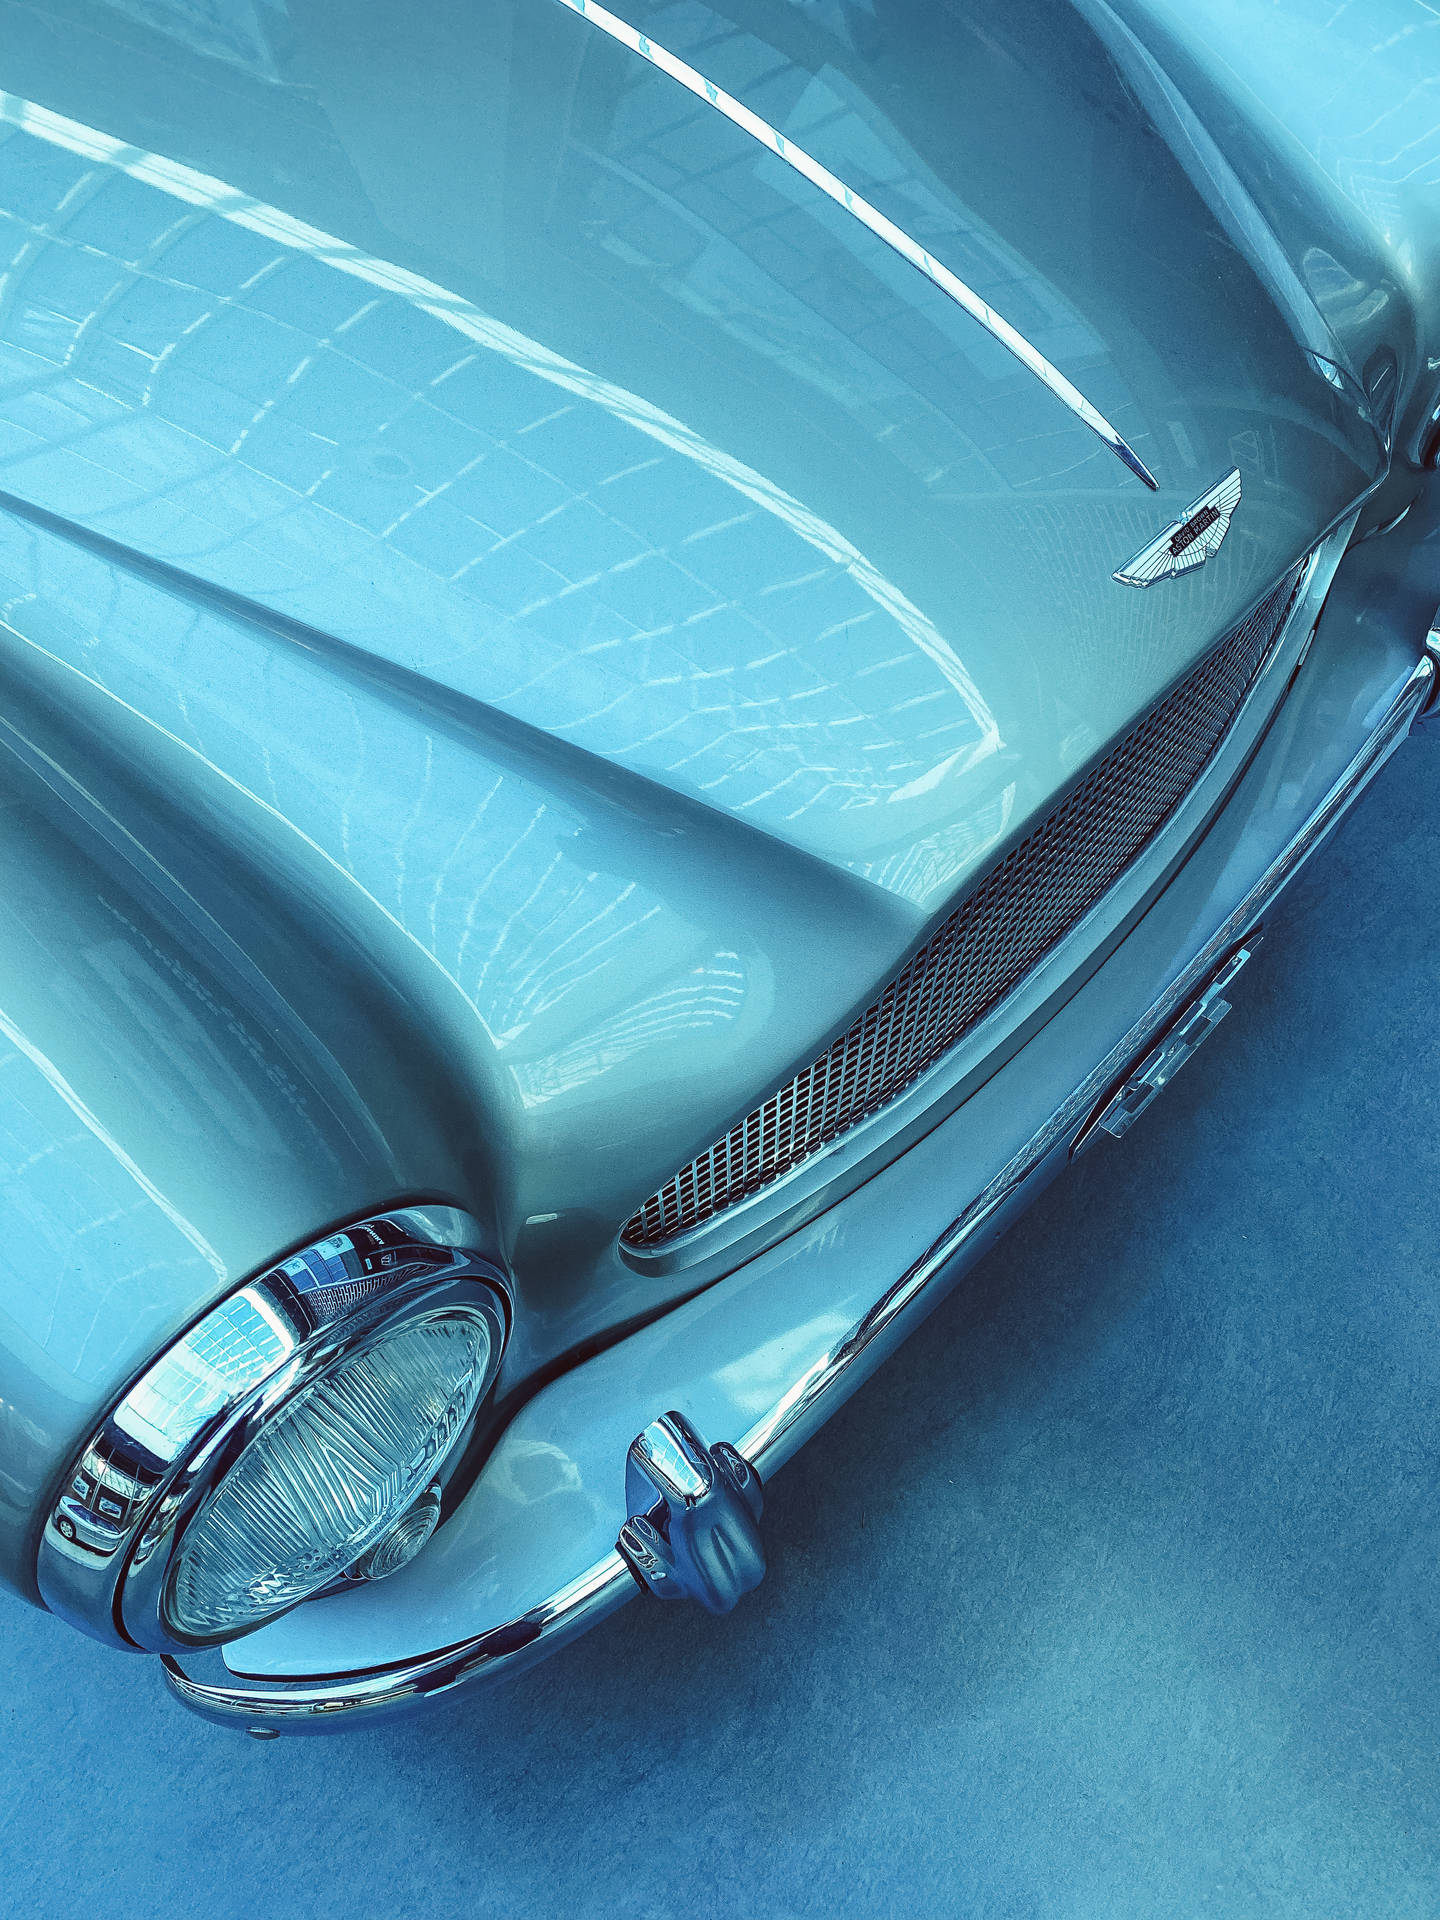 Aesthetic Blue Iphone Car Wallpaper